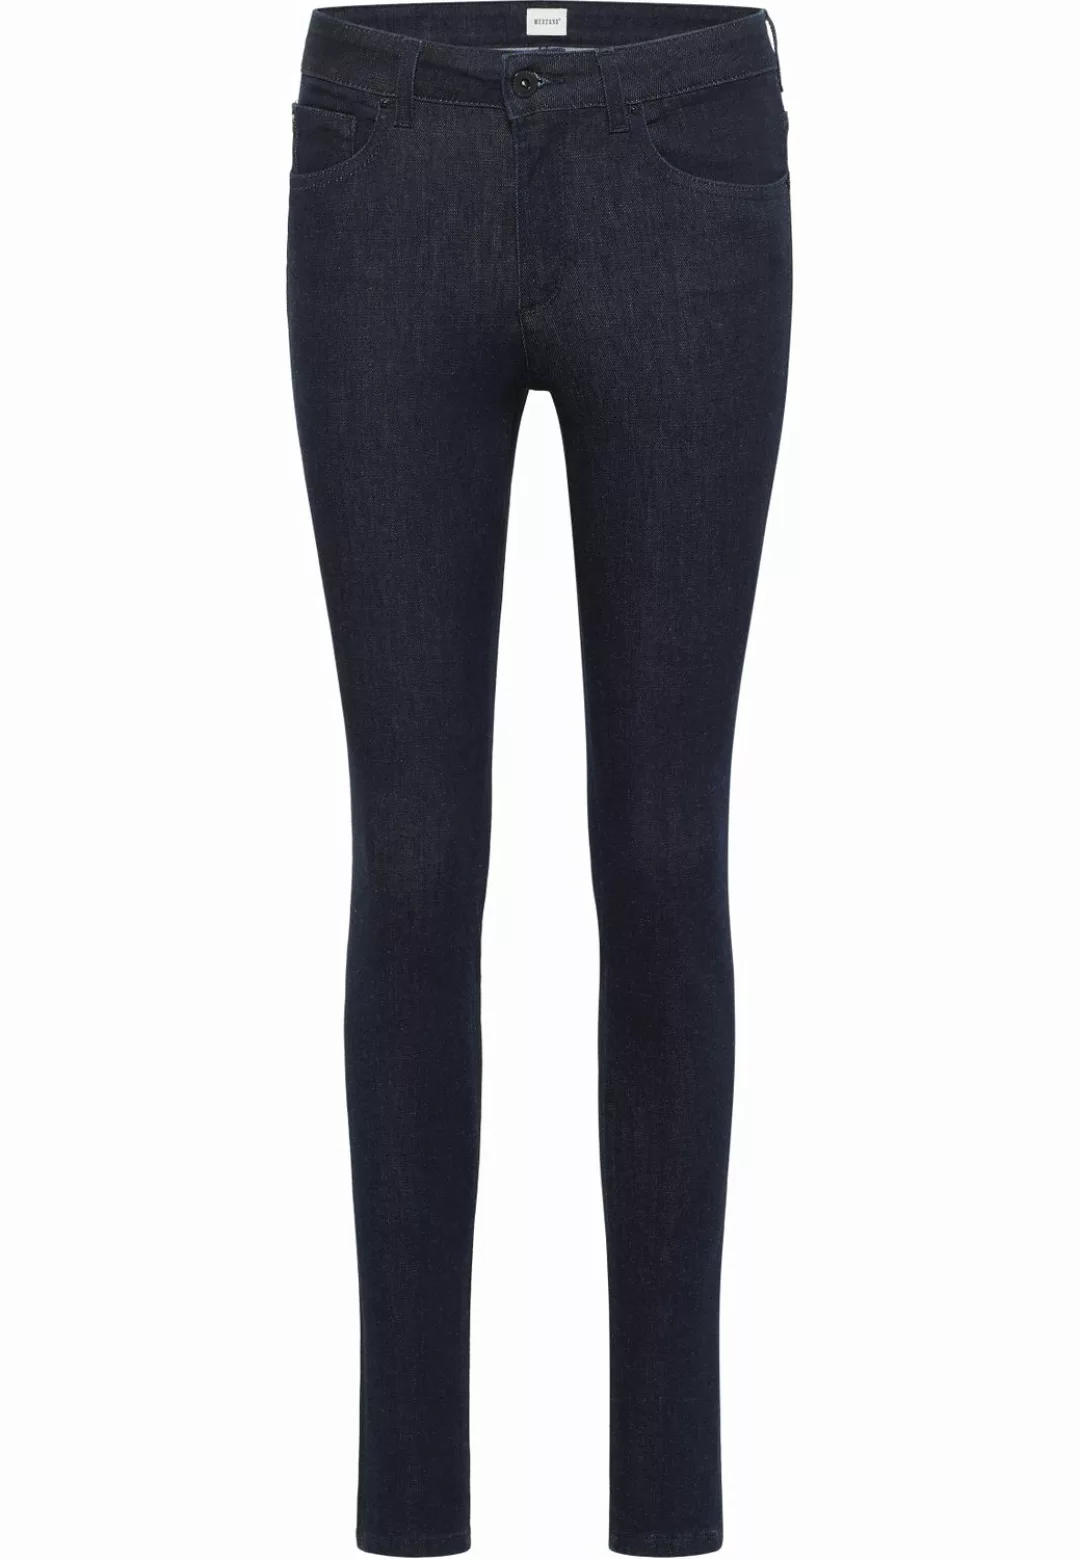 Mustang Damen Jeans SHELBY Skinny Fit - Blau - Dark Blue Denim günstig online kaufen